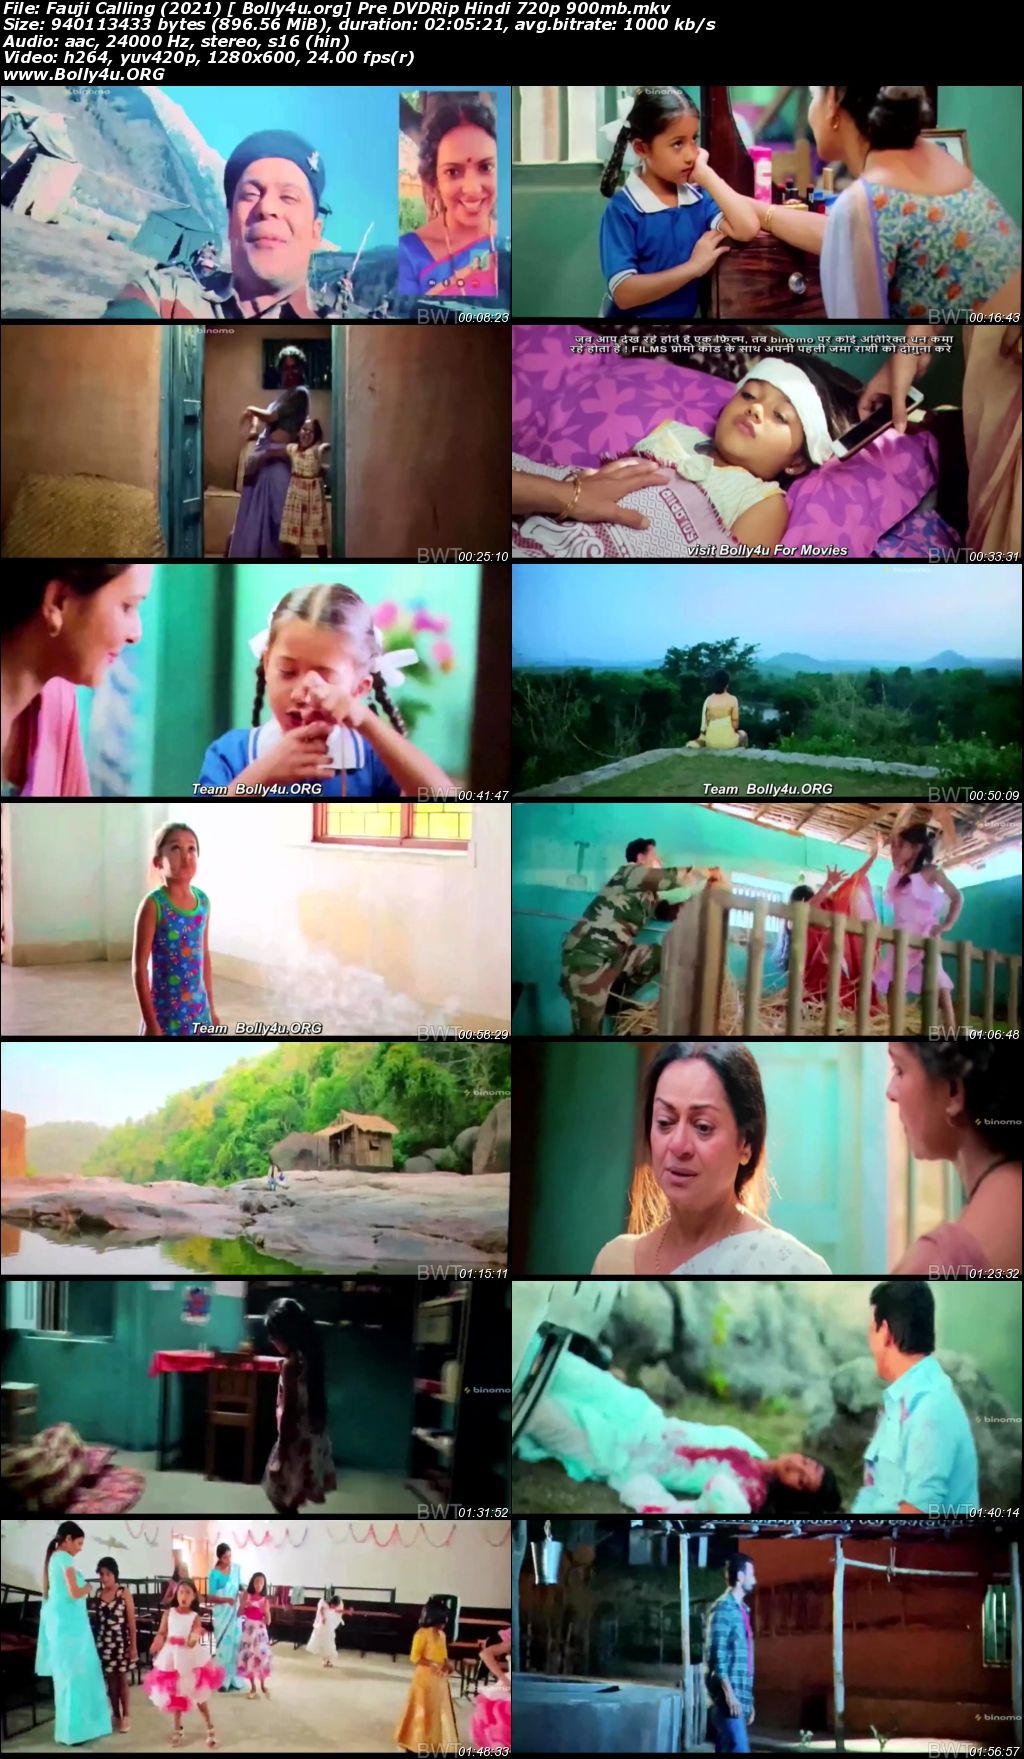 Fauji Calling 2021 Pre DVDRip 900Mb Hindi Movie Download 720p